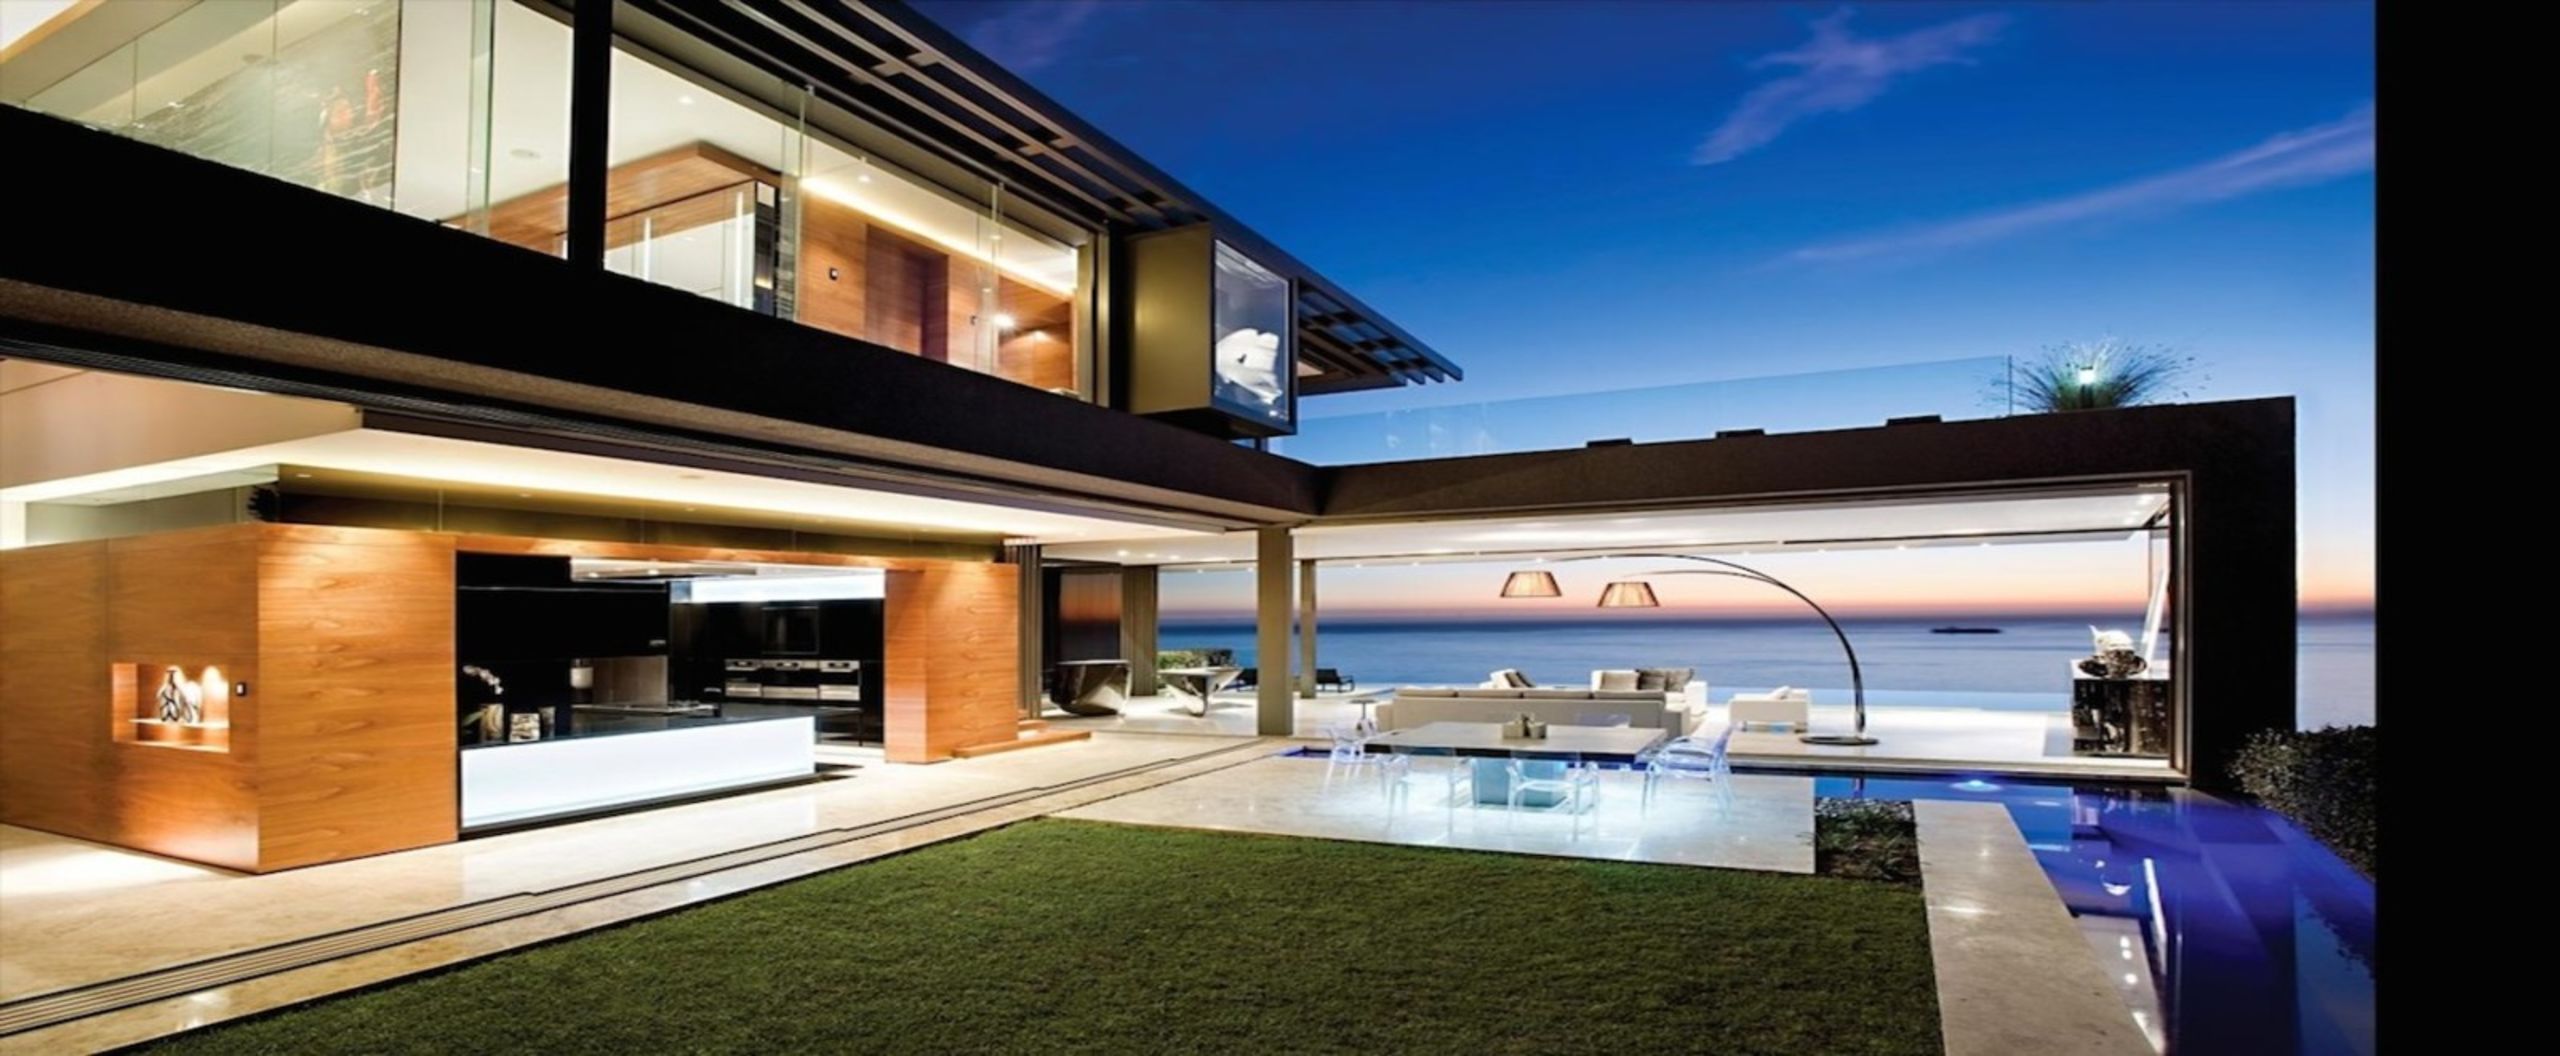 Carlsbad Ca Luxury Real Estate Homes For Sale In La Costa